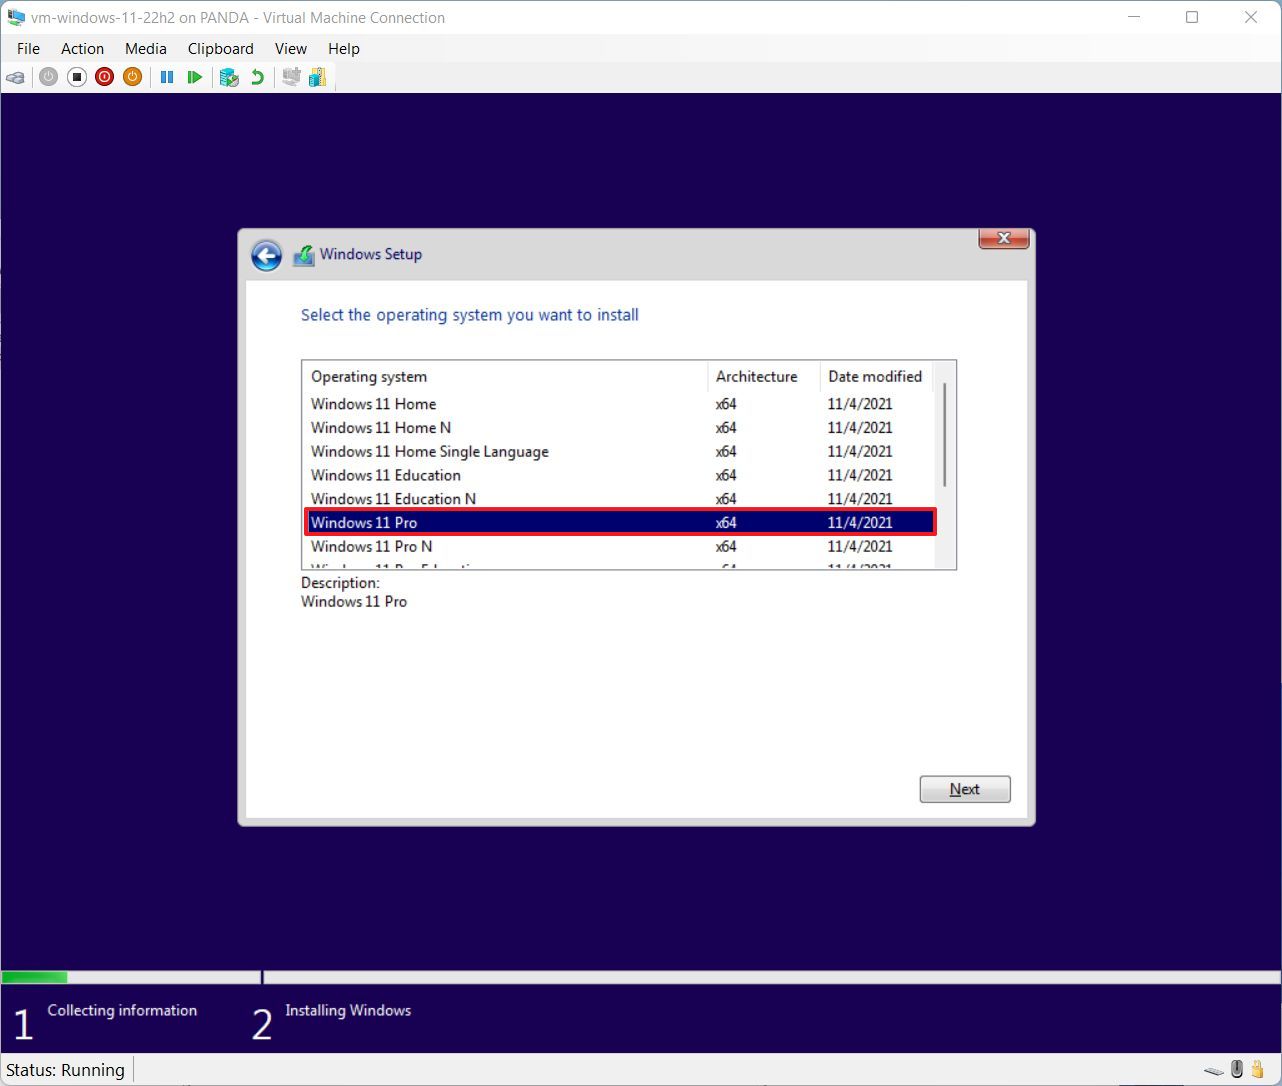 Select edition of Windows 11